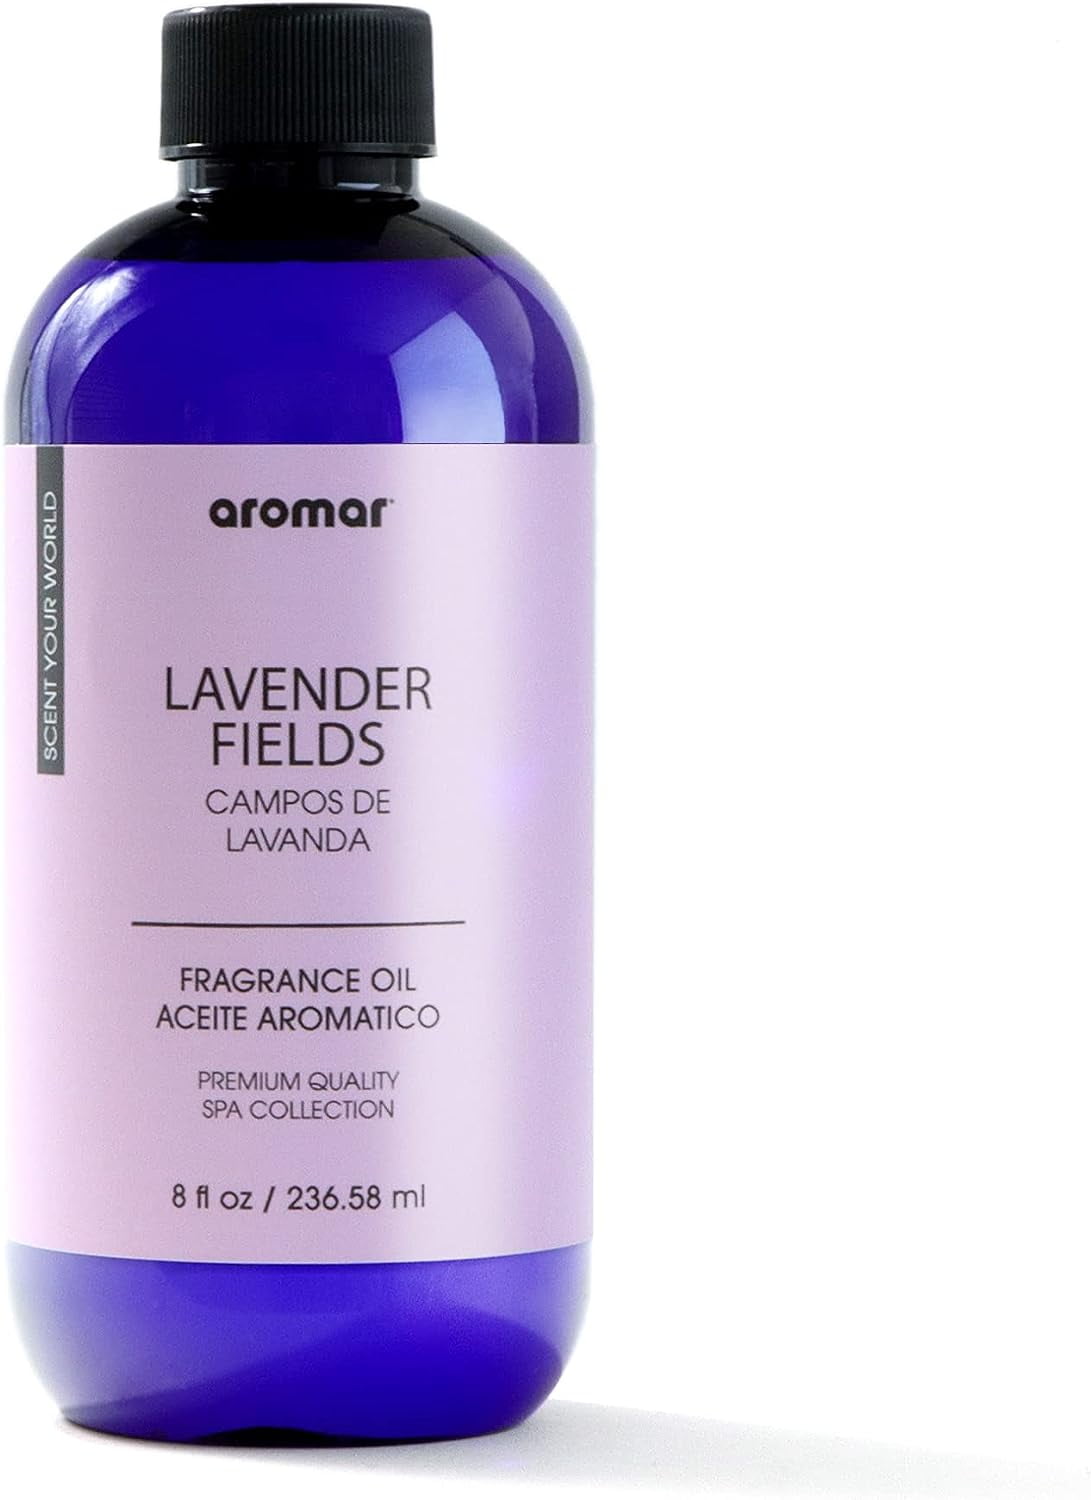 Lavender Fields (2 oz.) – Thwicky